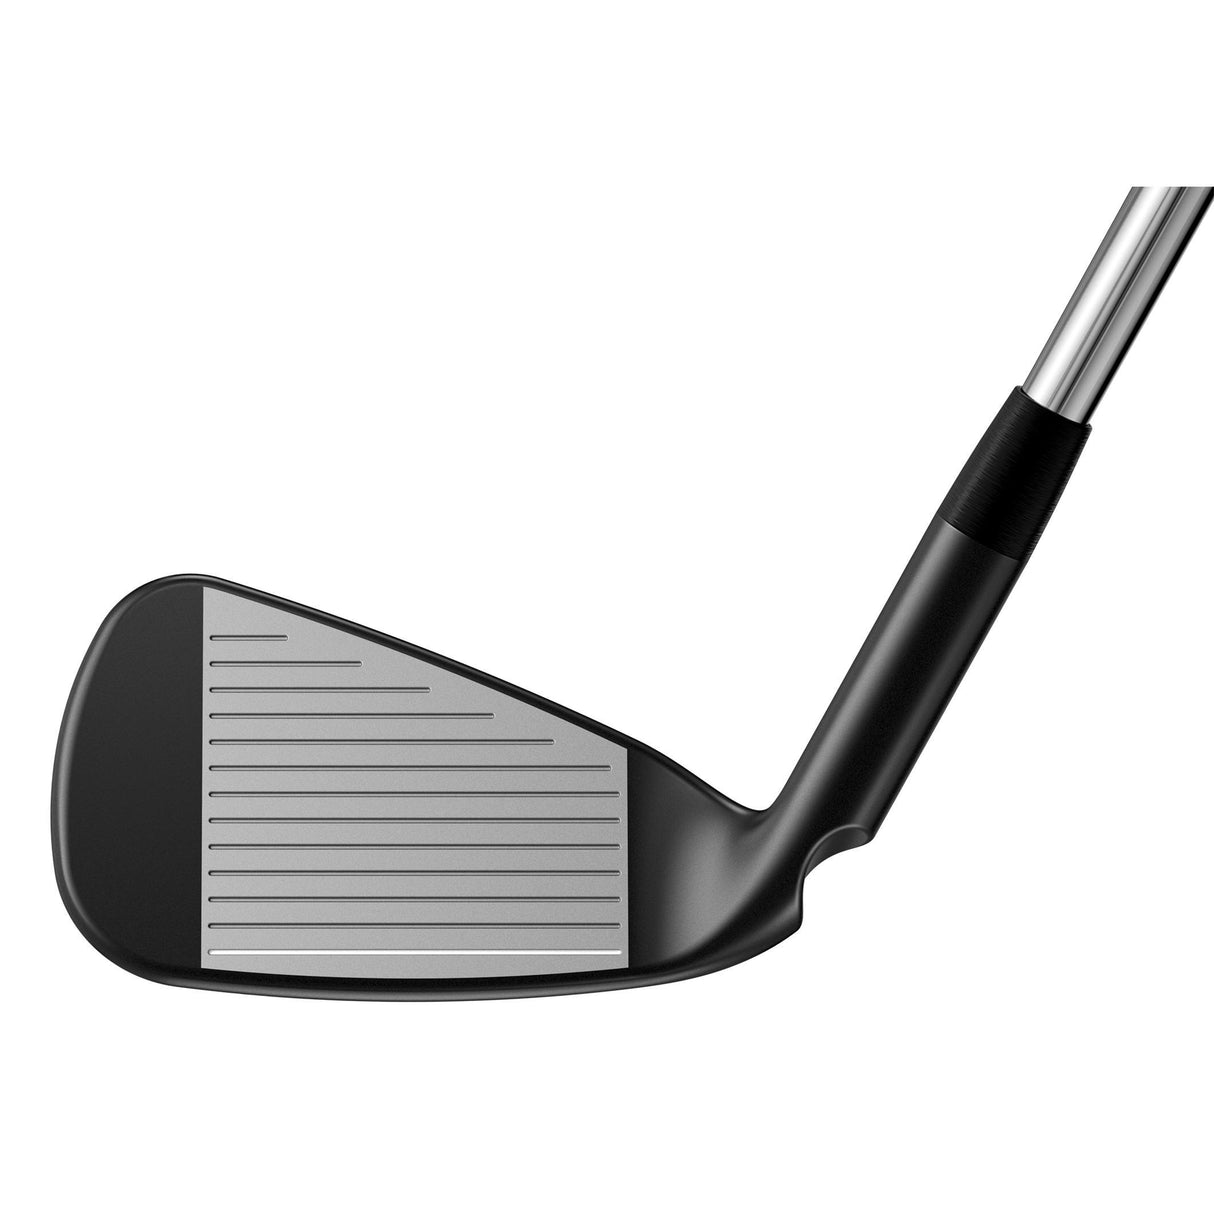 PING G710 IRONS 5-PW, UW - Niagara Golf Warehouse PING Iron Sets